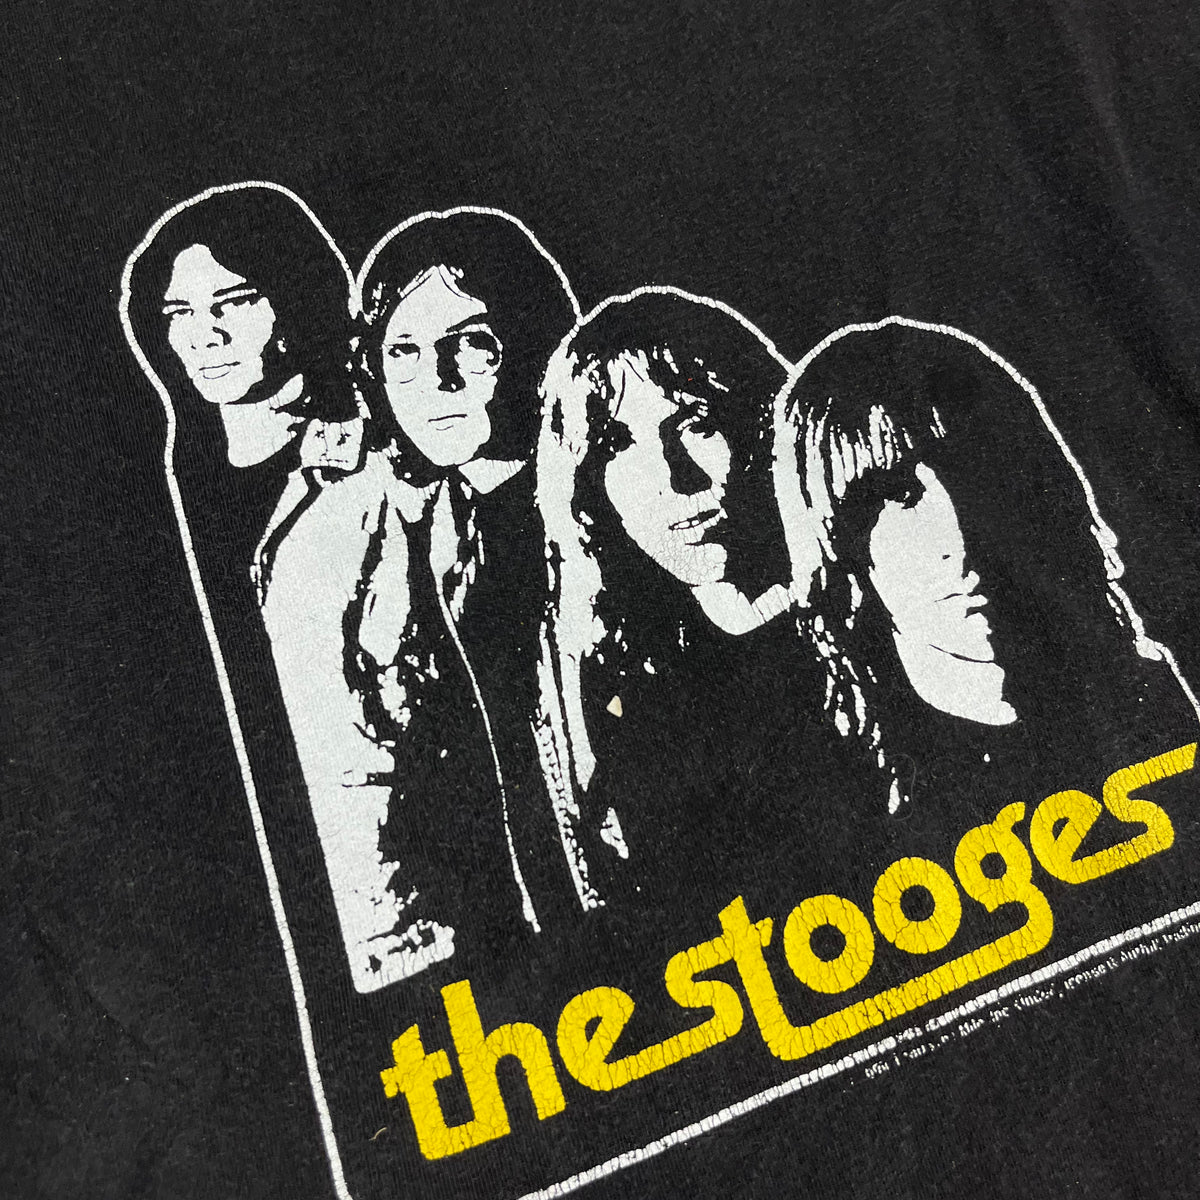 Vintage The Stooges &quot;Michigan&quot; Raglan Shirt